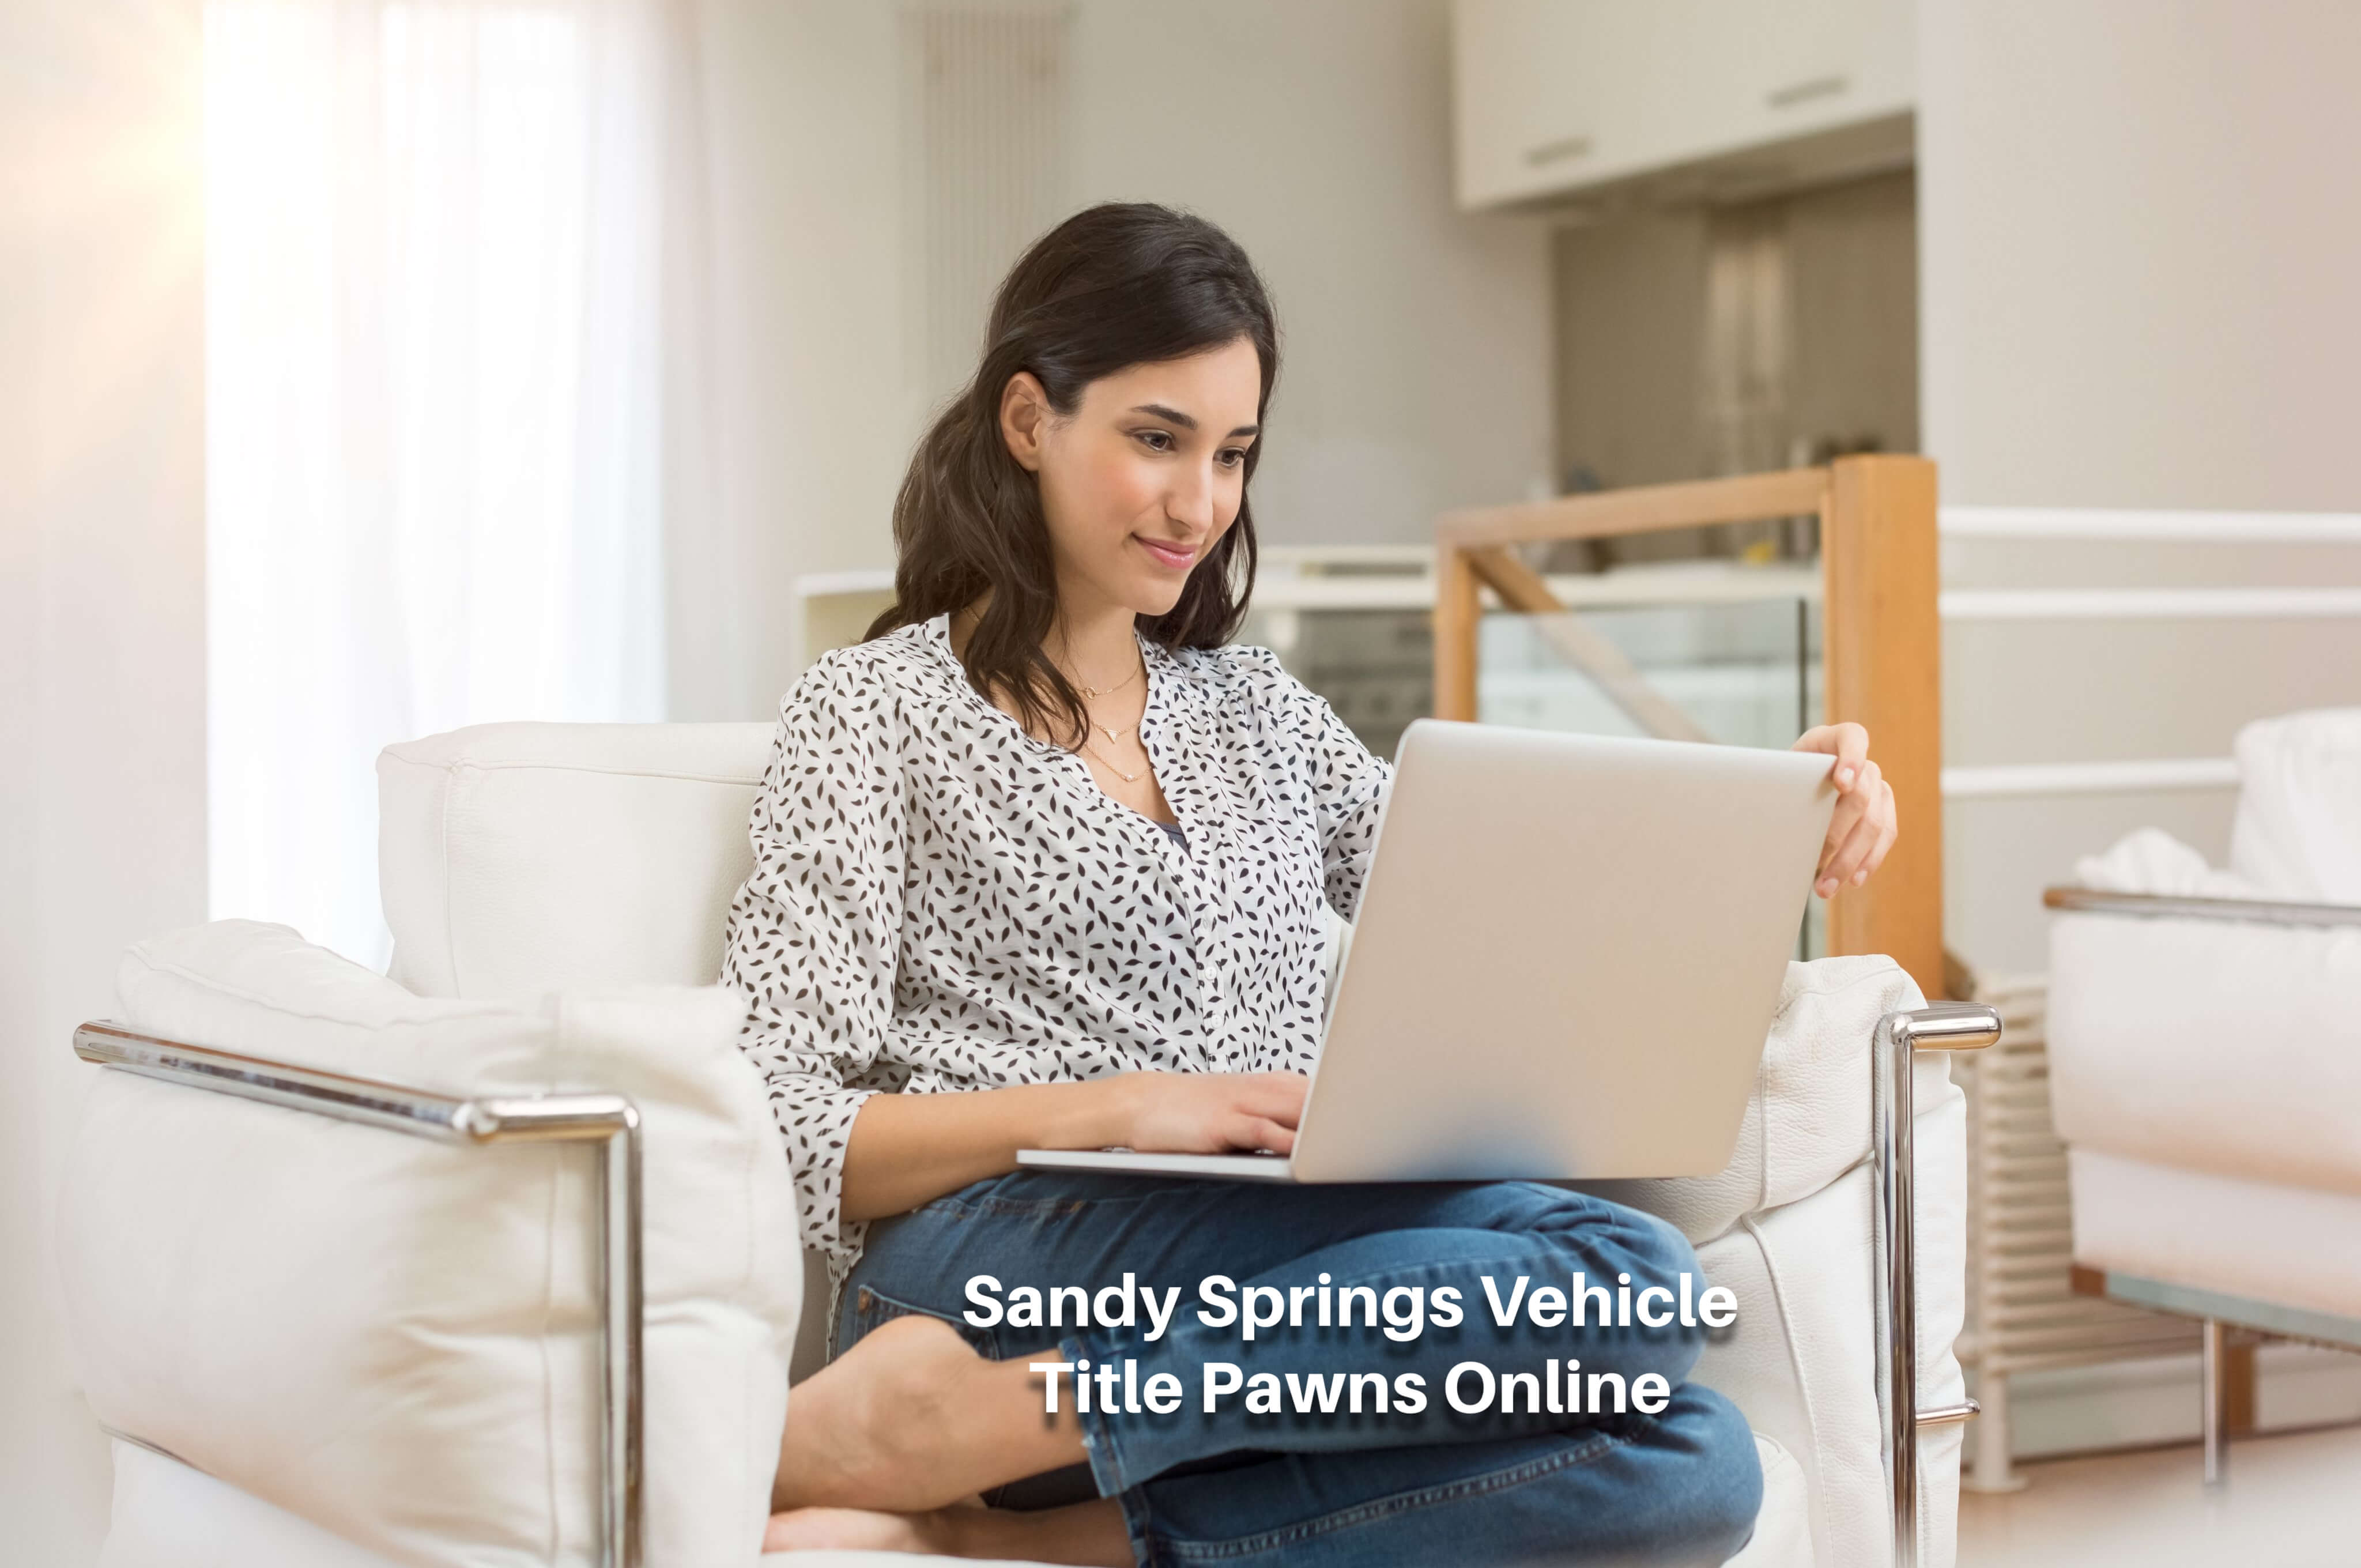 applying for sandy springs vehicle title loans online